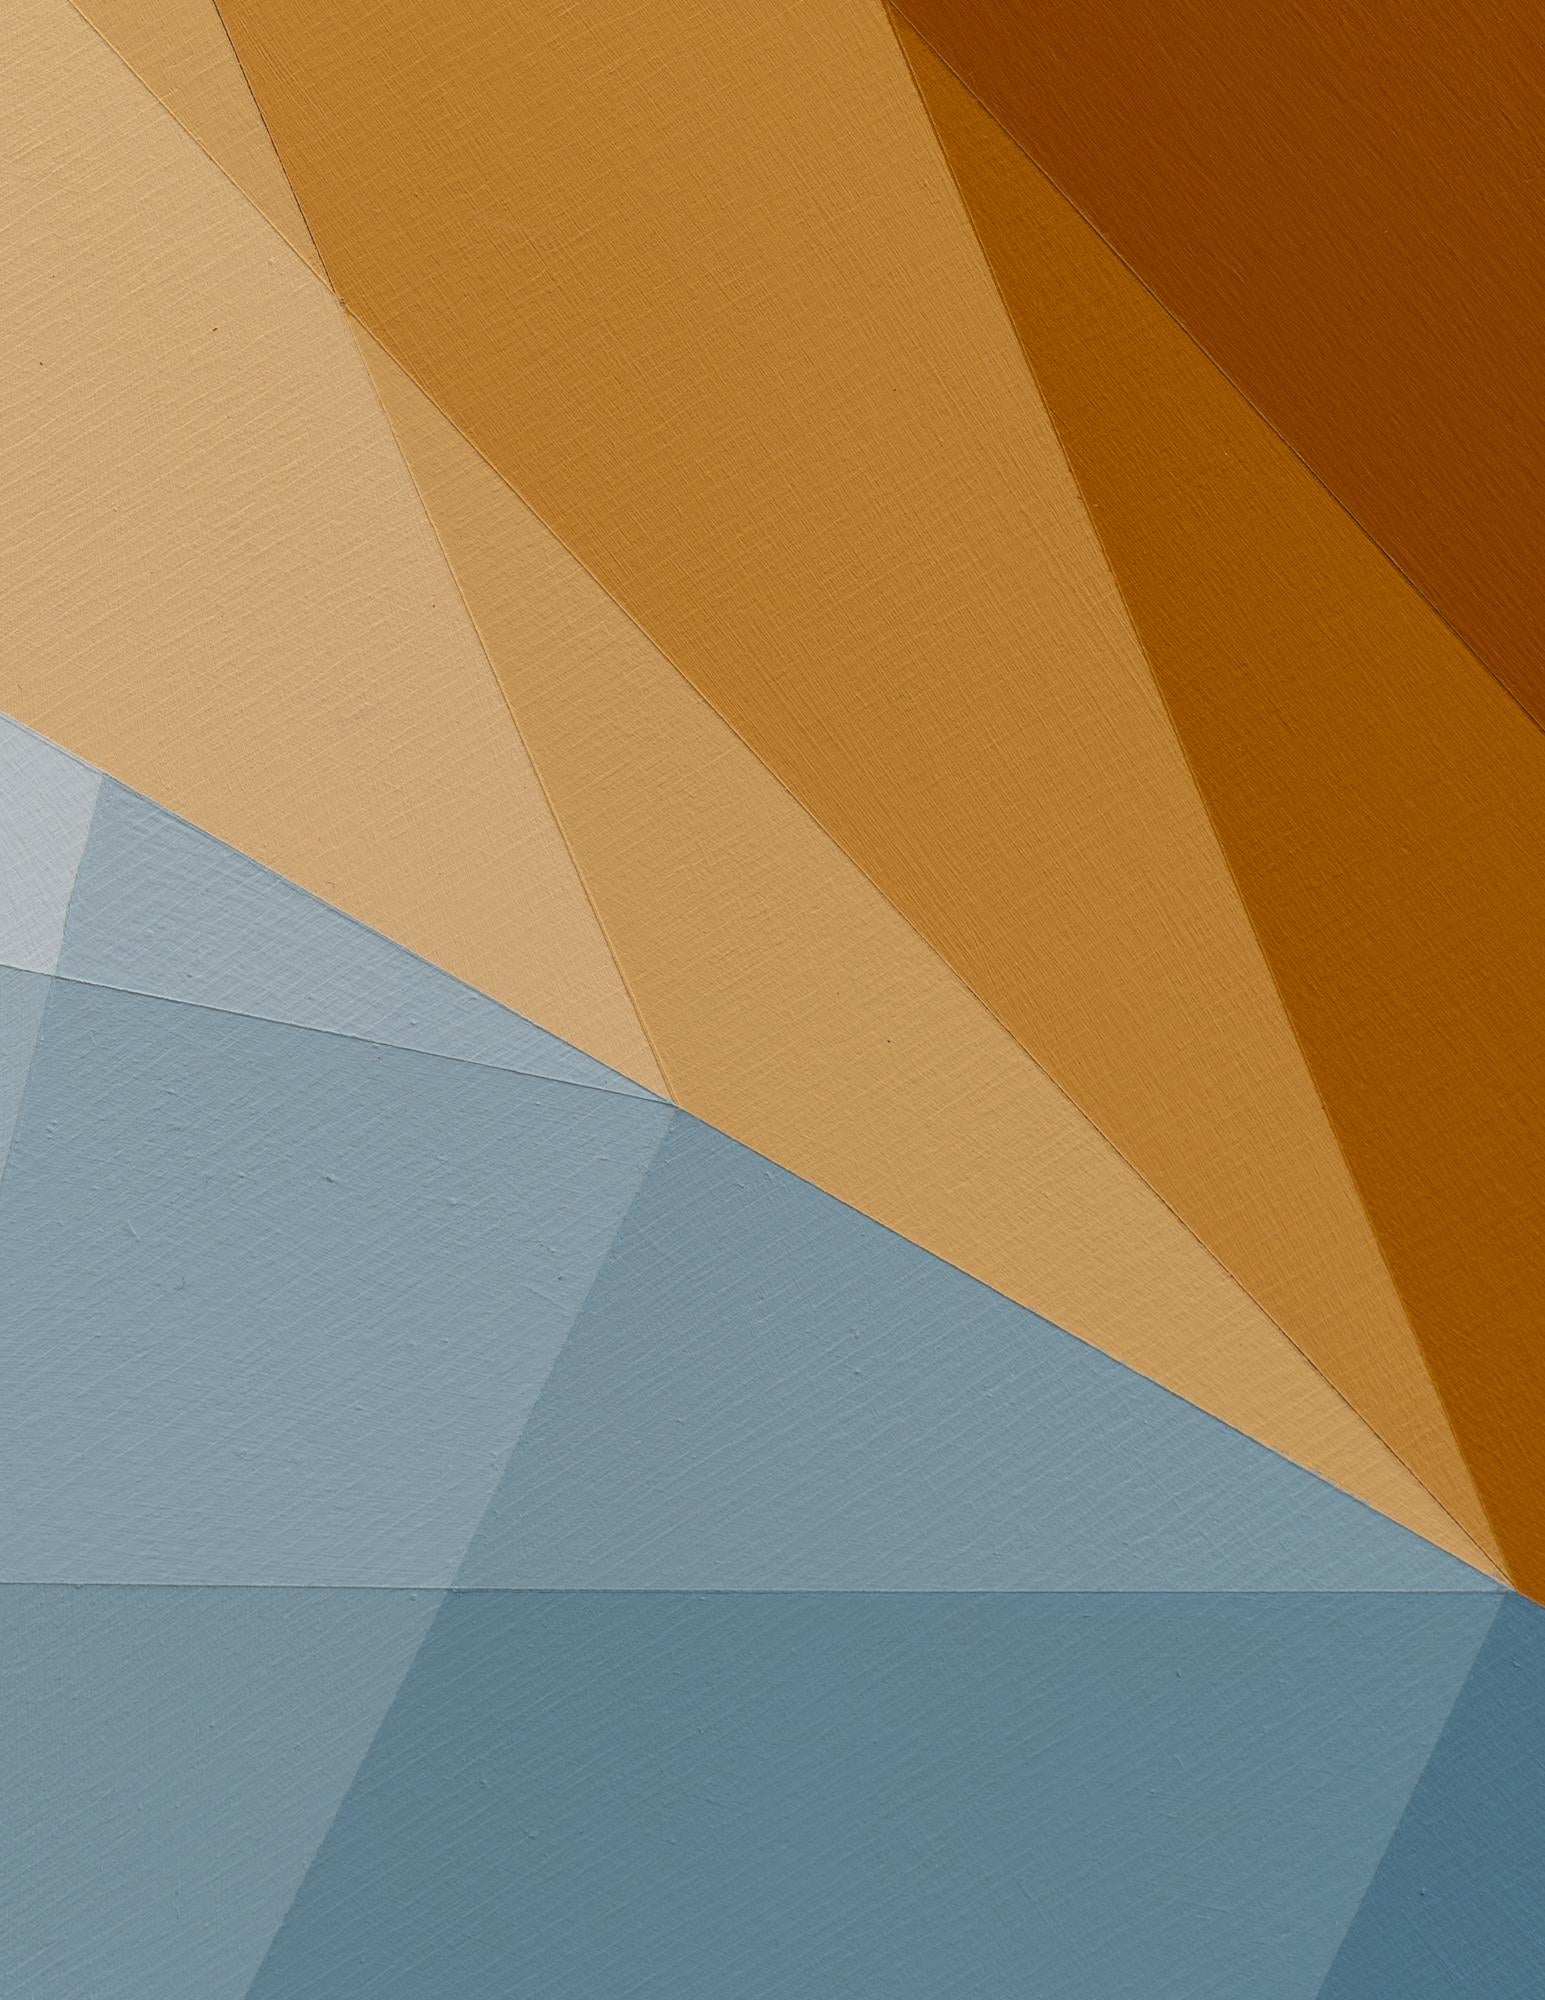 SUNDOG 21 - Triangular Geometric Abstract Painting Inspired by Sundogs & Nature For Sale 4